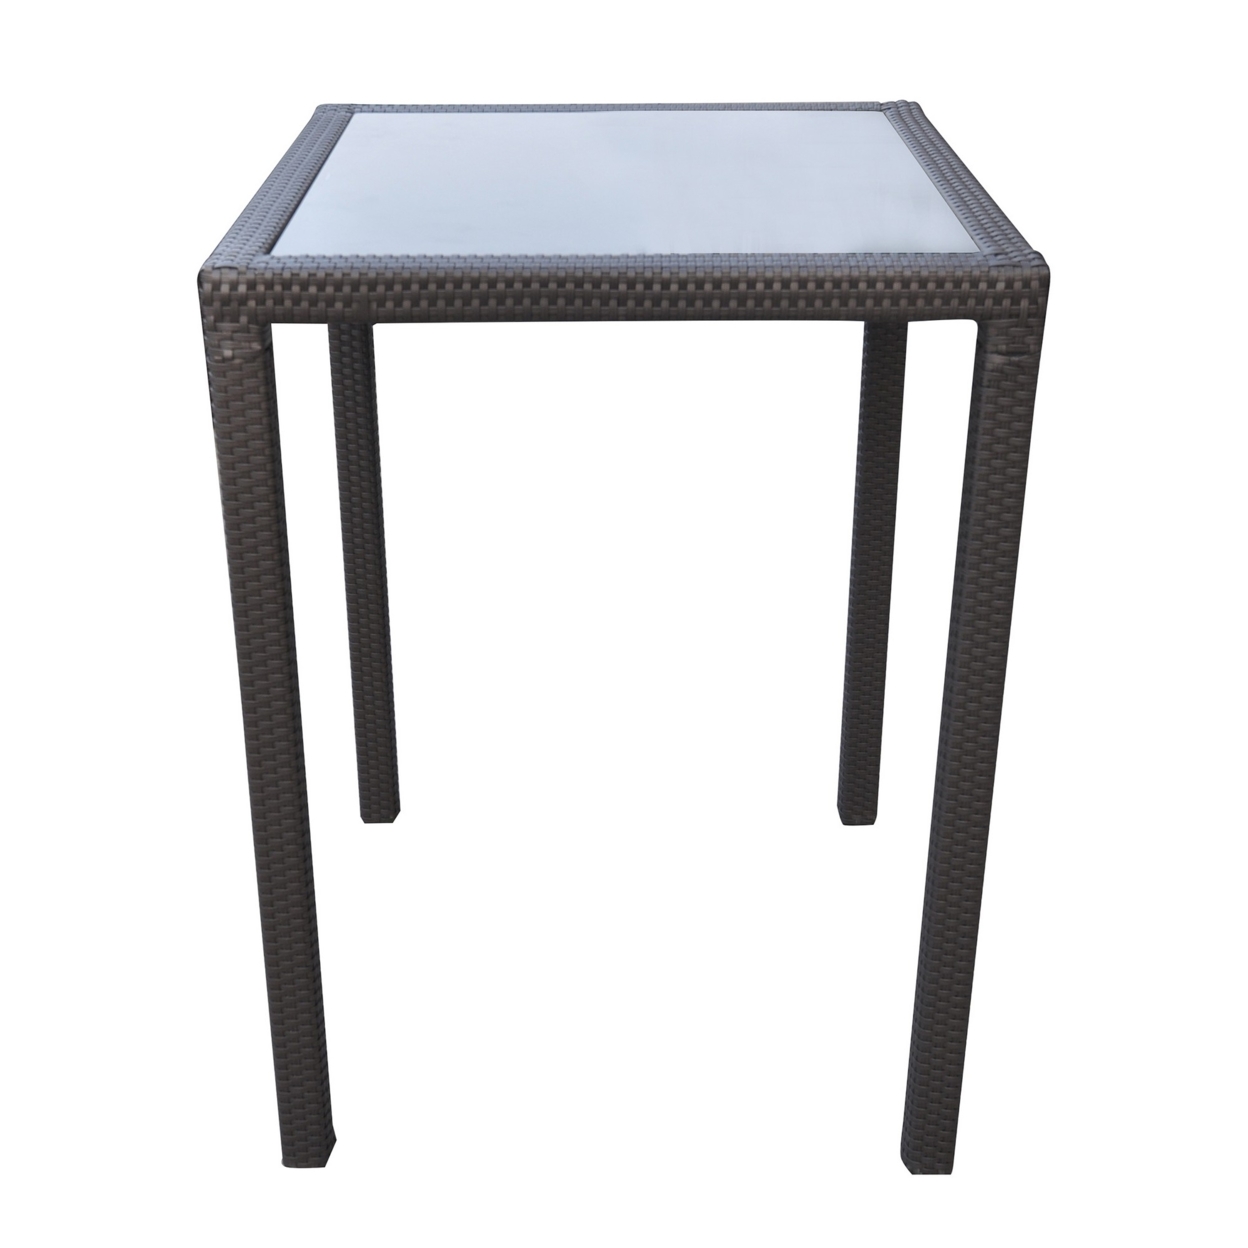 32 Inches Glass Top Wicker Woven Aluminum Bar Table, Black- Saltoro Sherpi